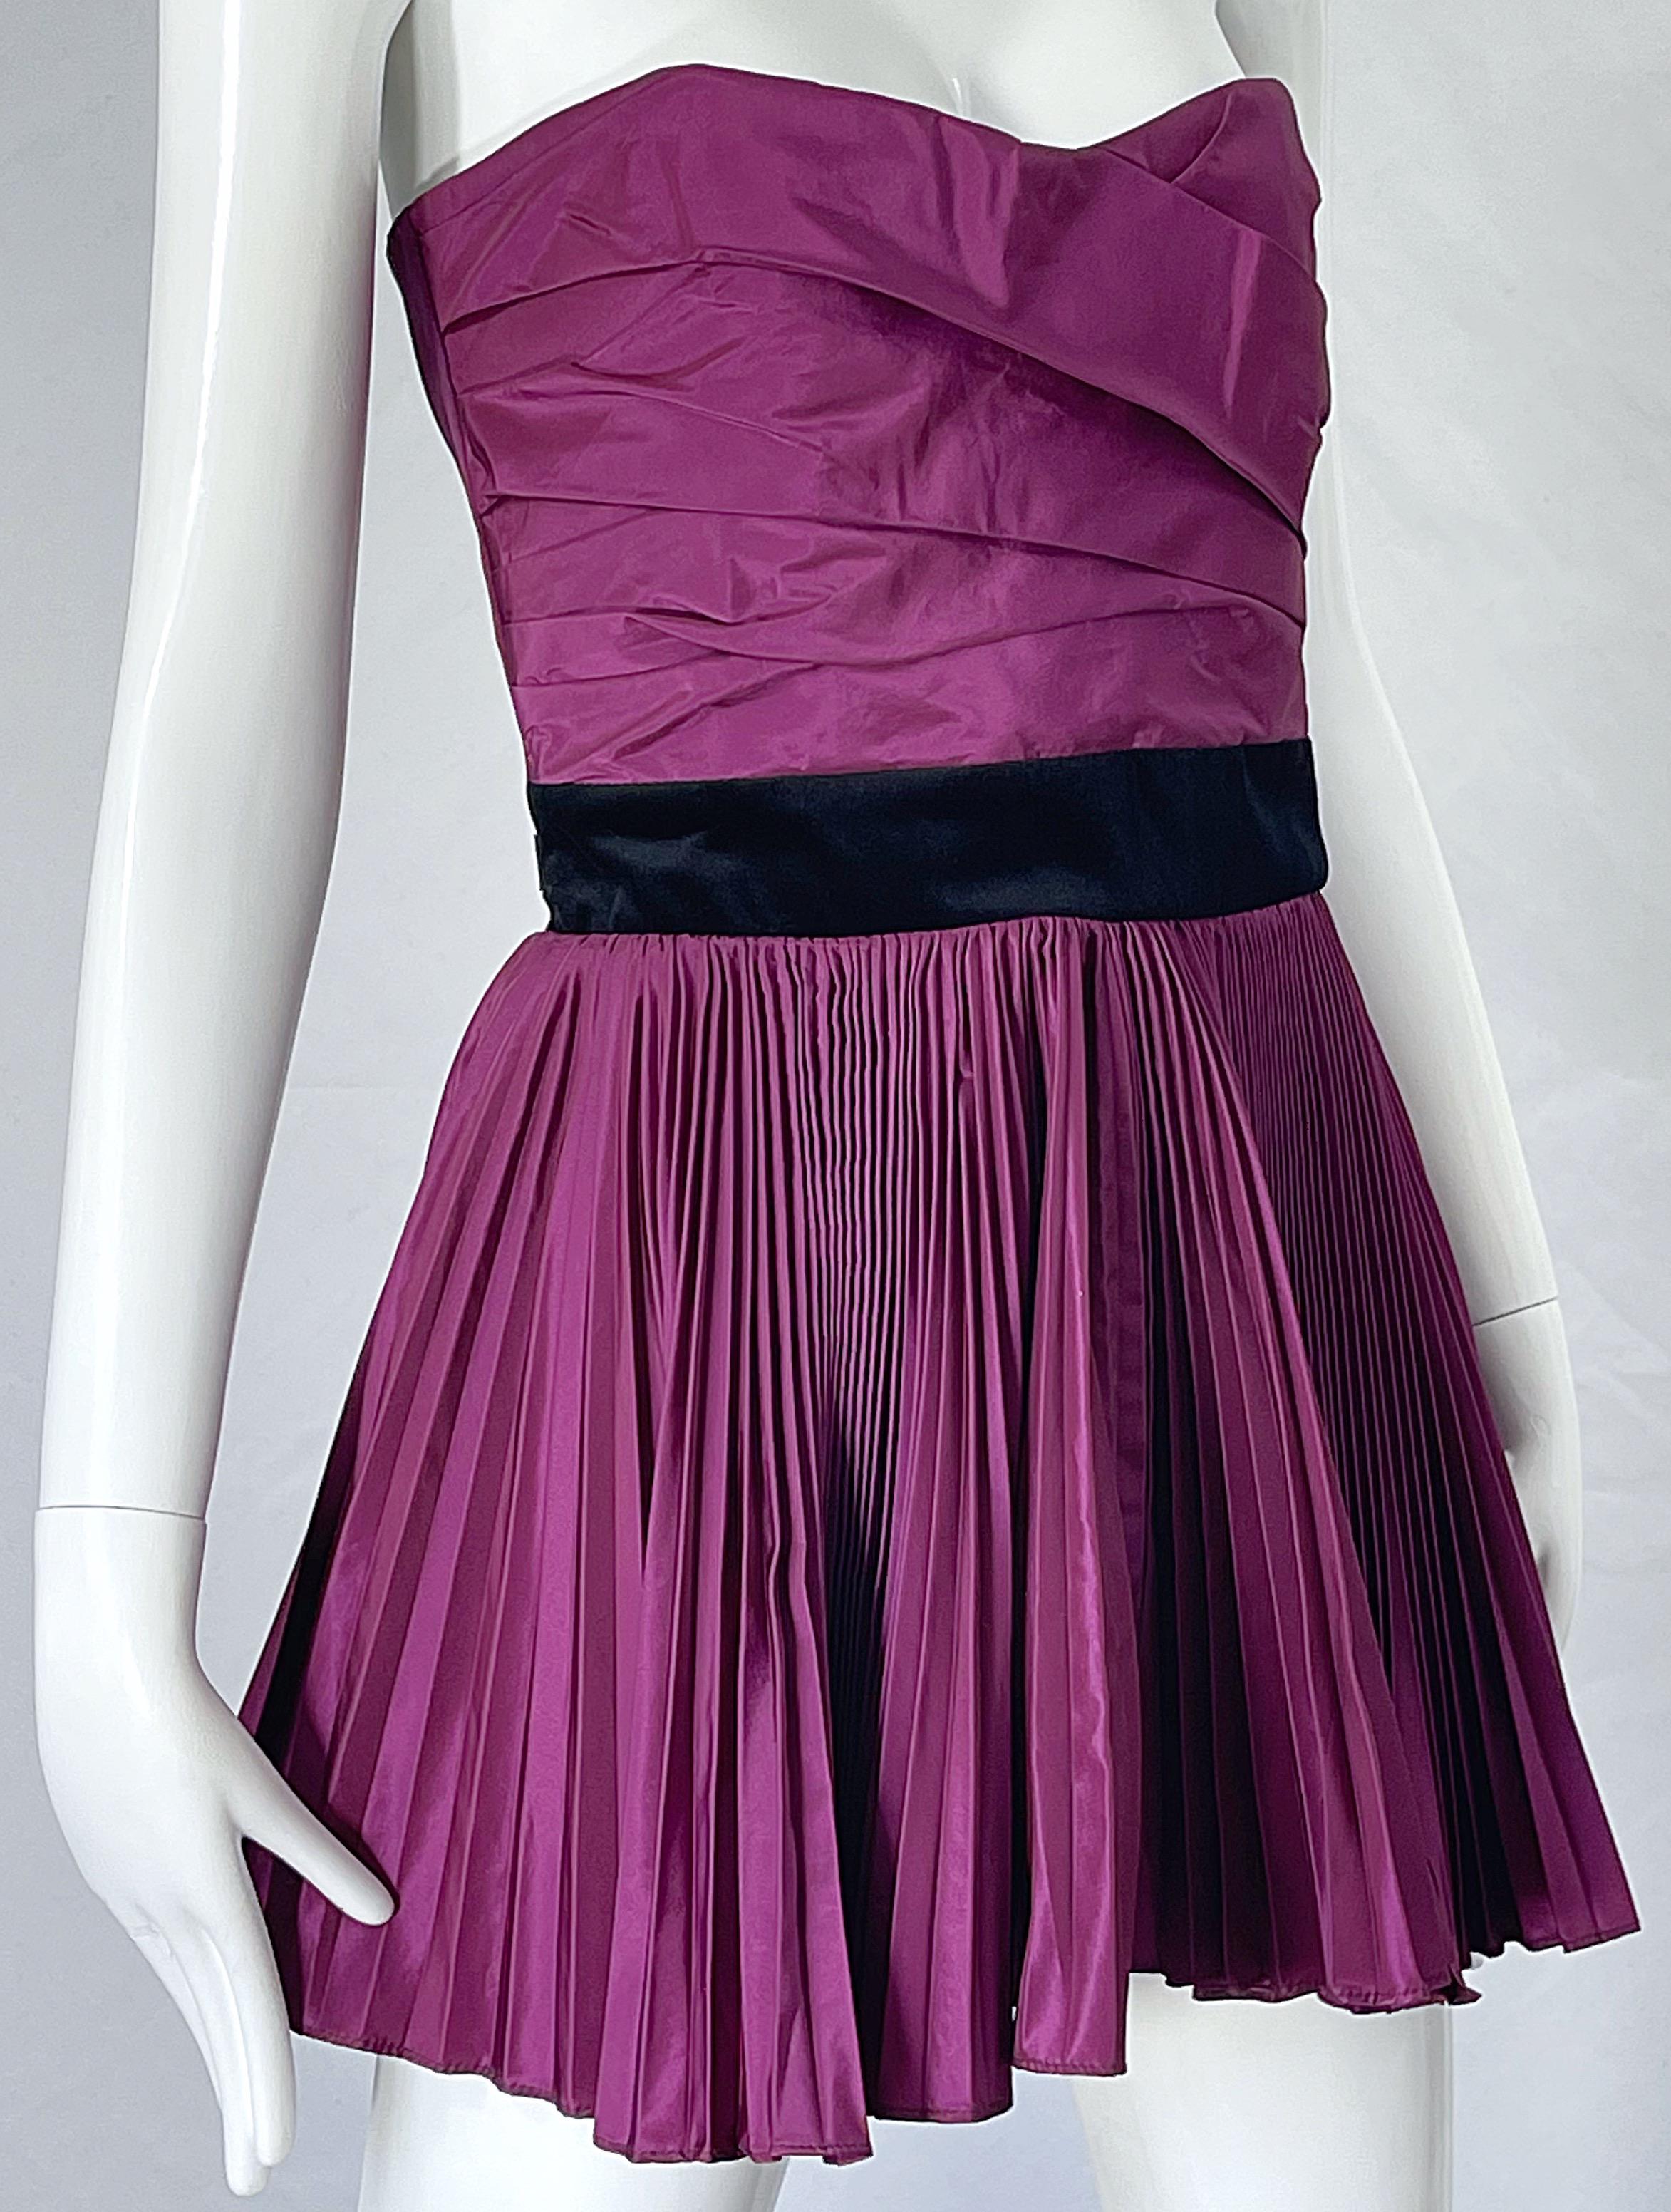 Women's Yves Saint Laurent S/S 2012 Stefano Pilati Purple Silk Taffeta Mini Dress or Top For Sale